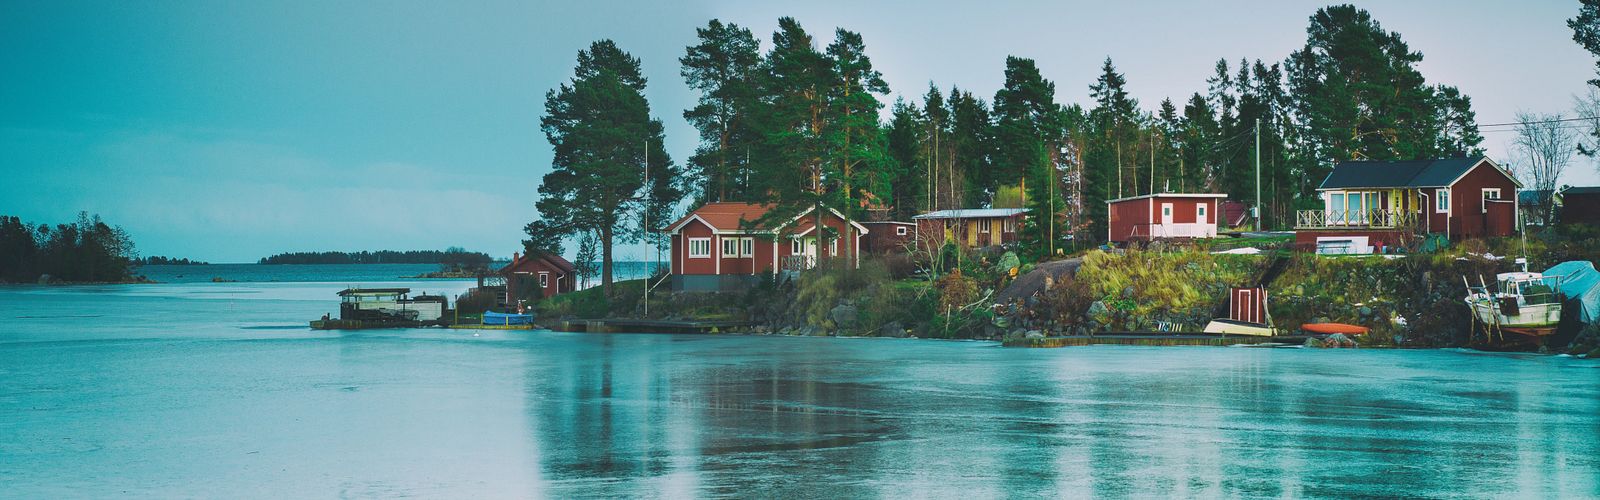 Nordic nature, island and lake